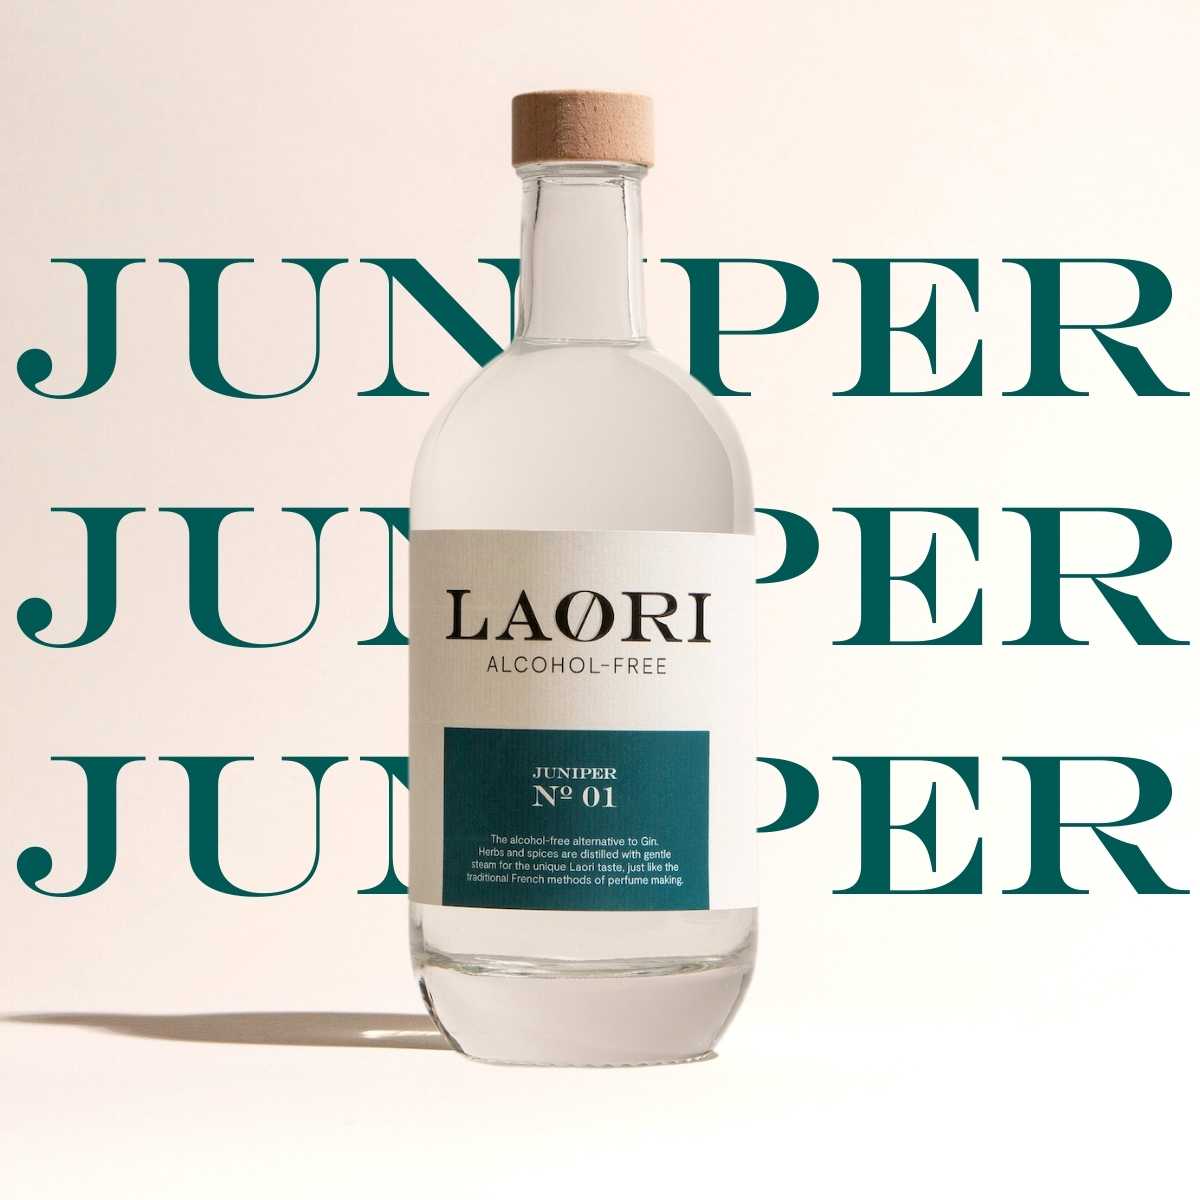 French 75 Set: Laori Juniper No 1 + Sparkling Riesling